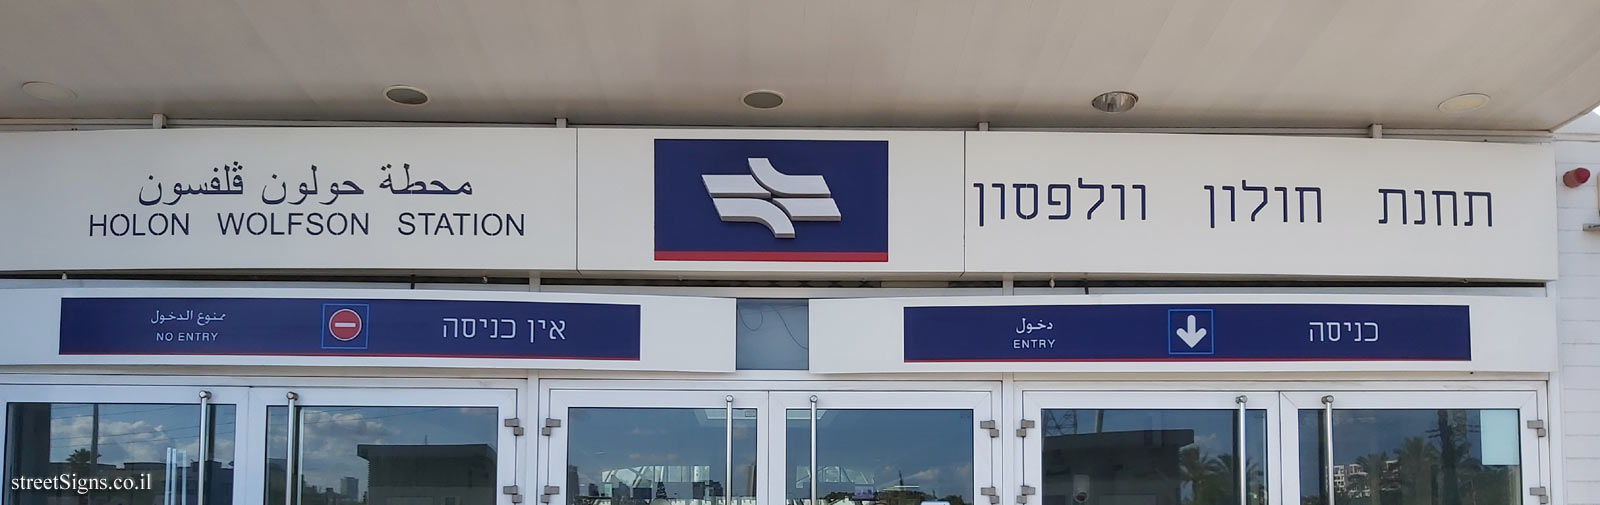 Holon - Israel Railroad - Wolfson Station